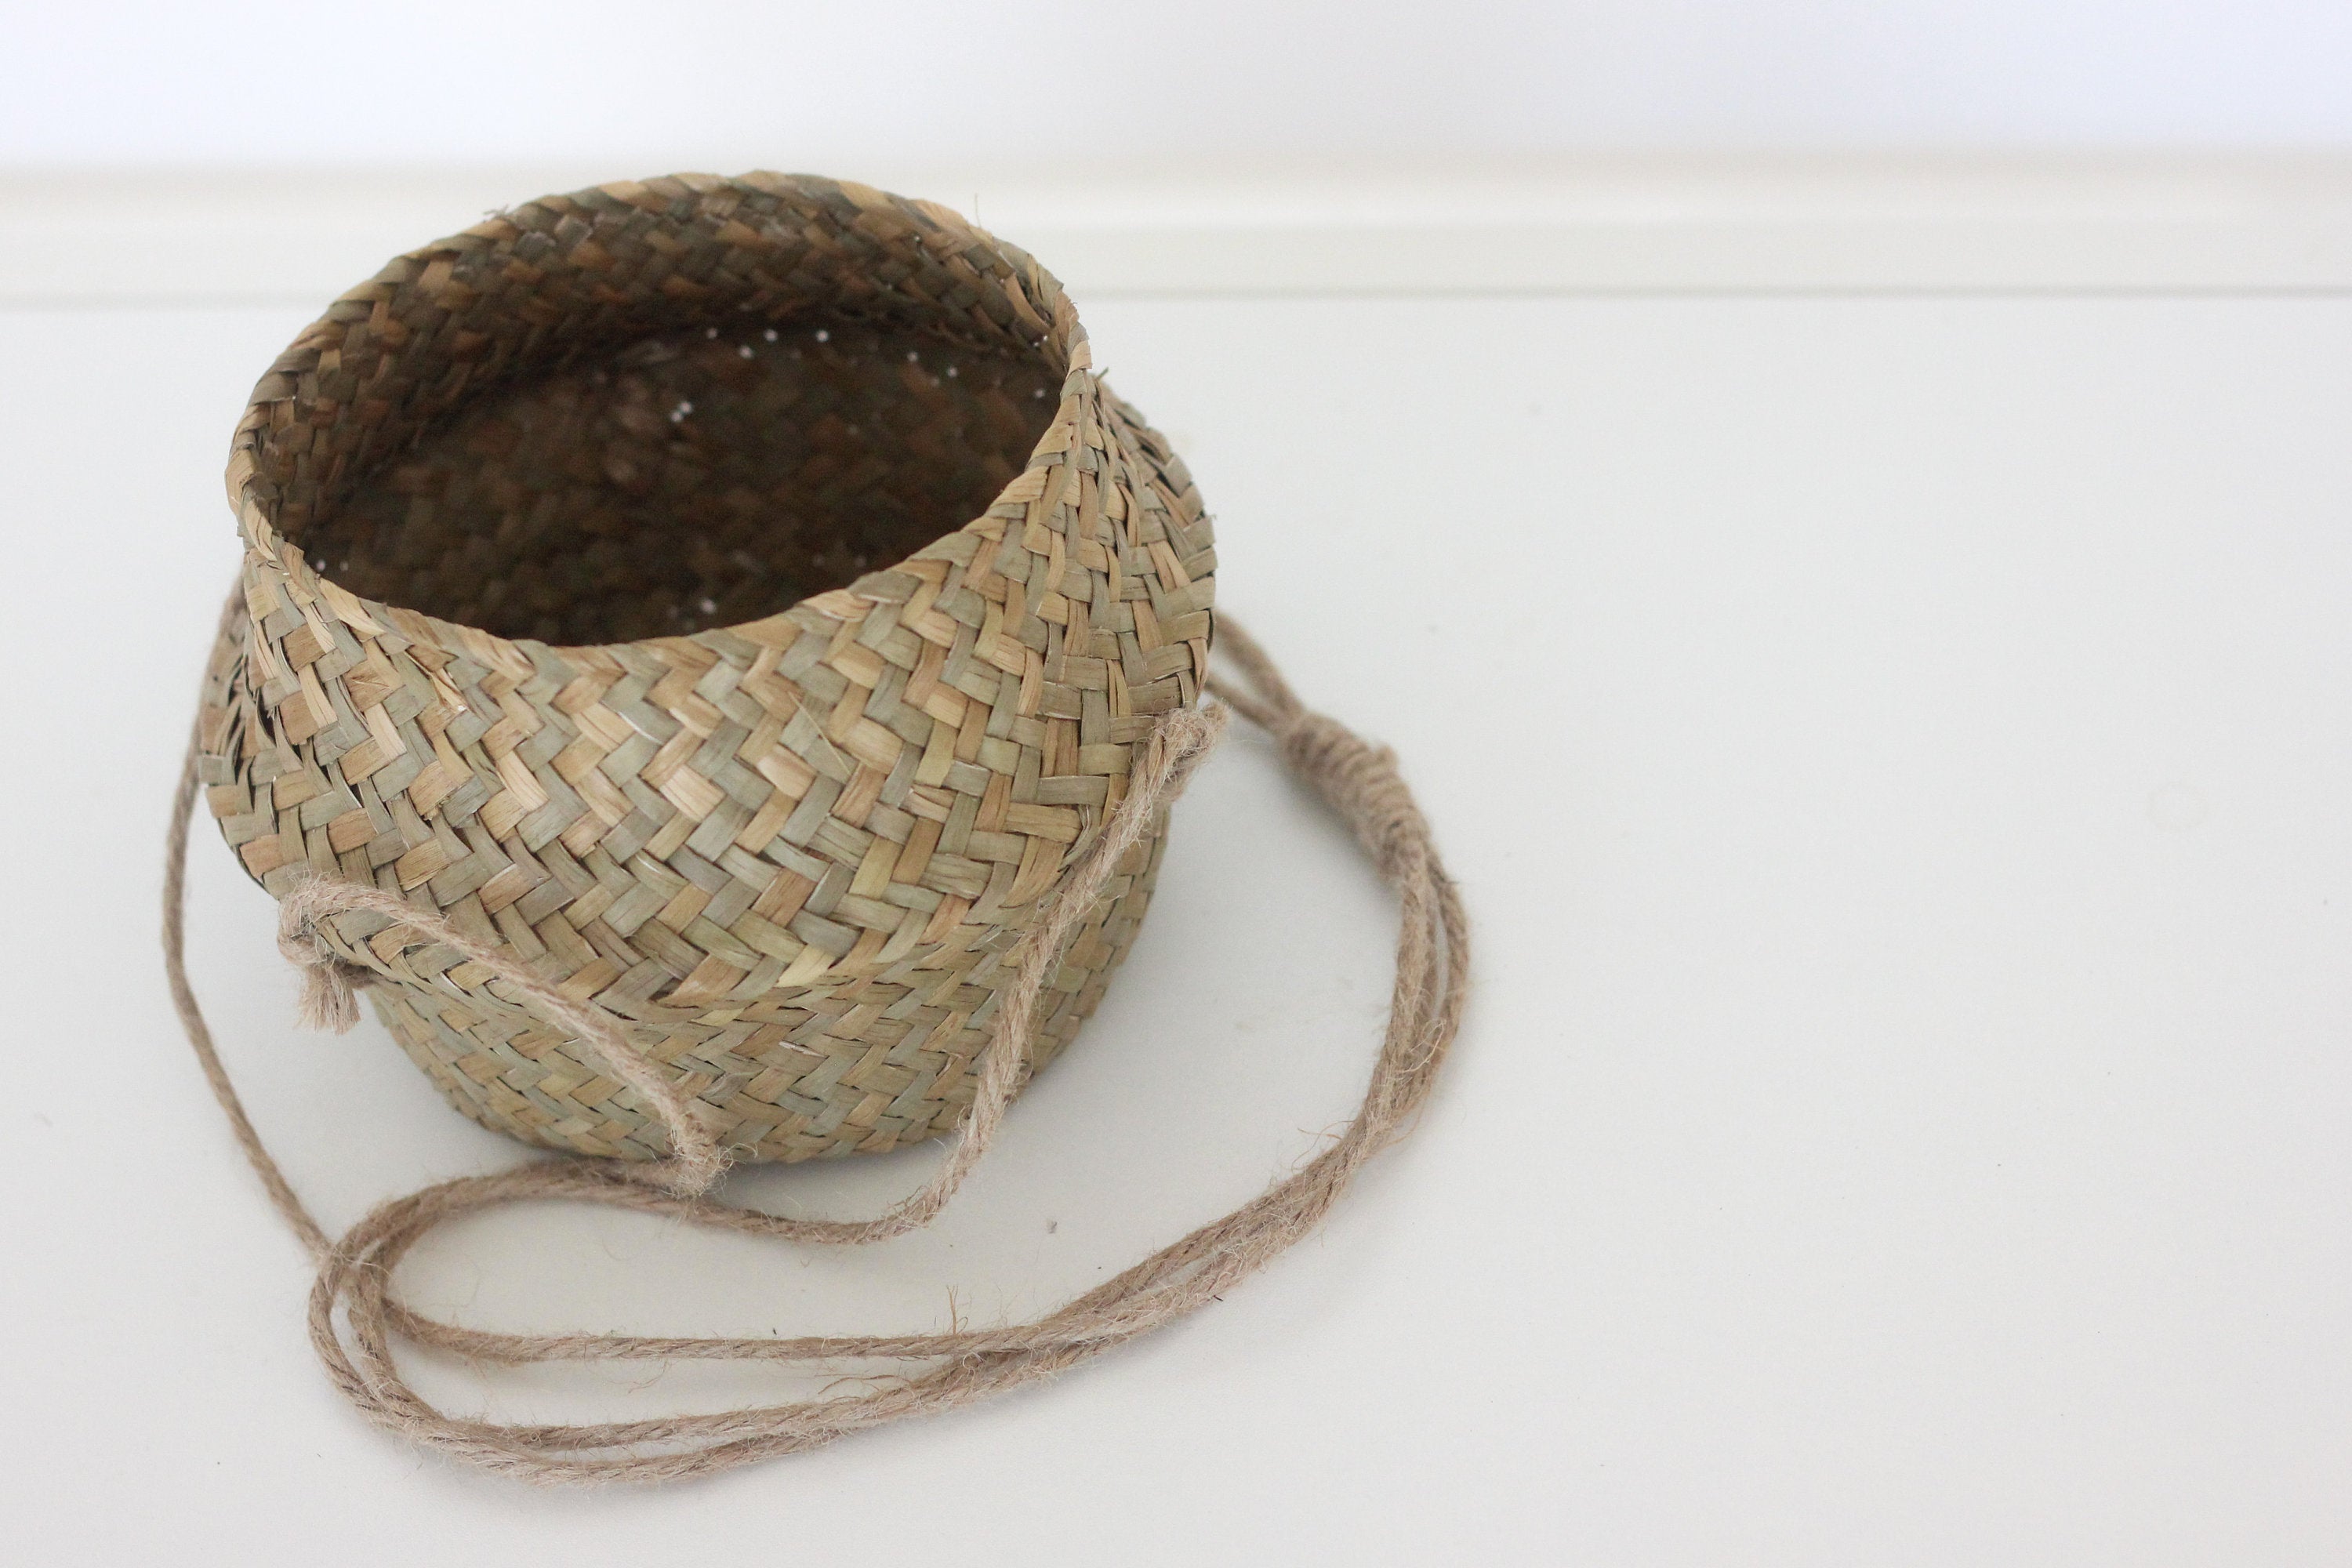 Boho Hanging Seagrass Belly Basket Planter